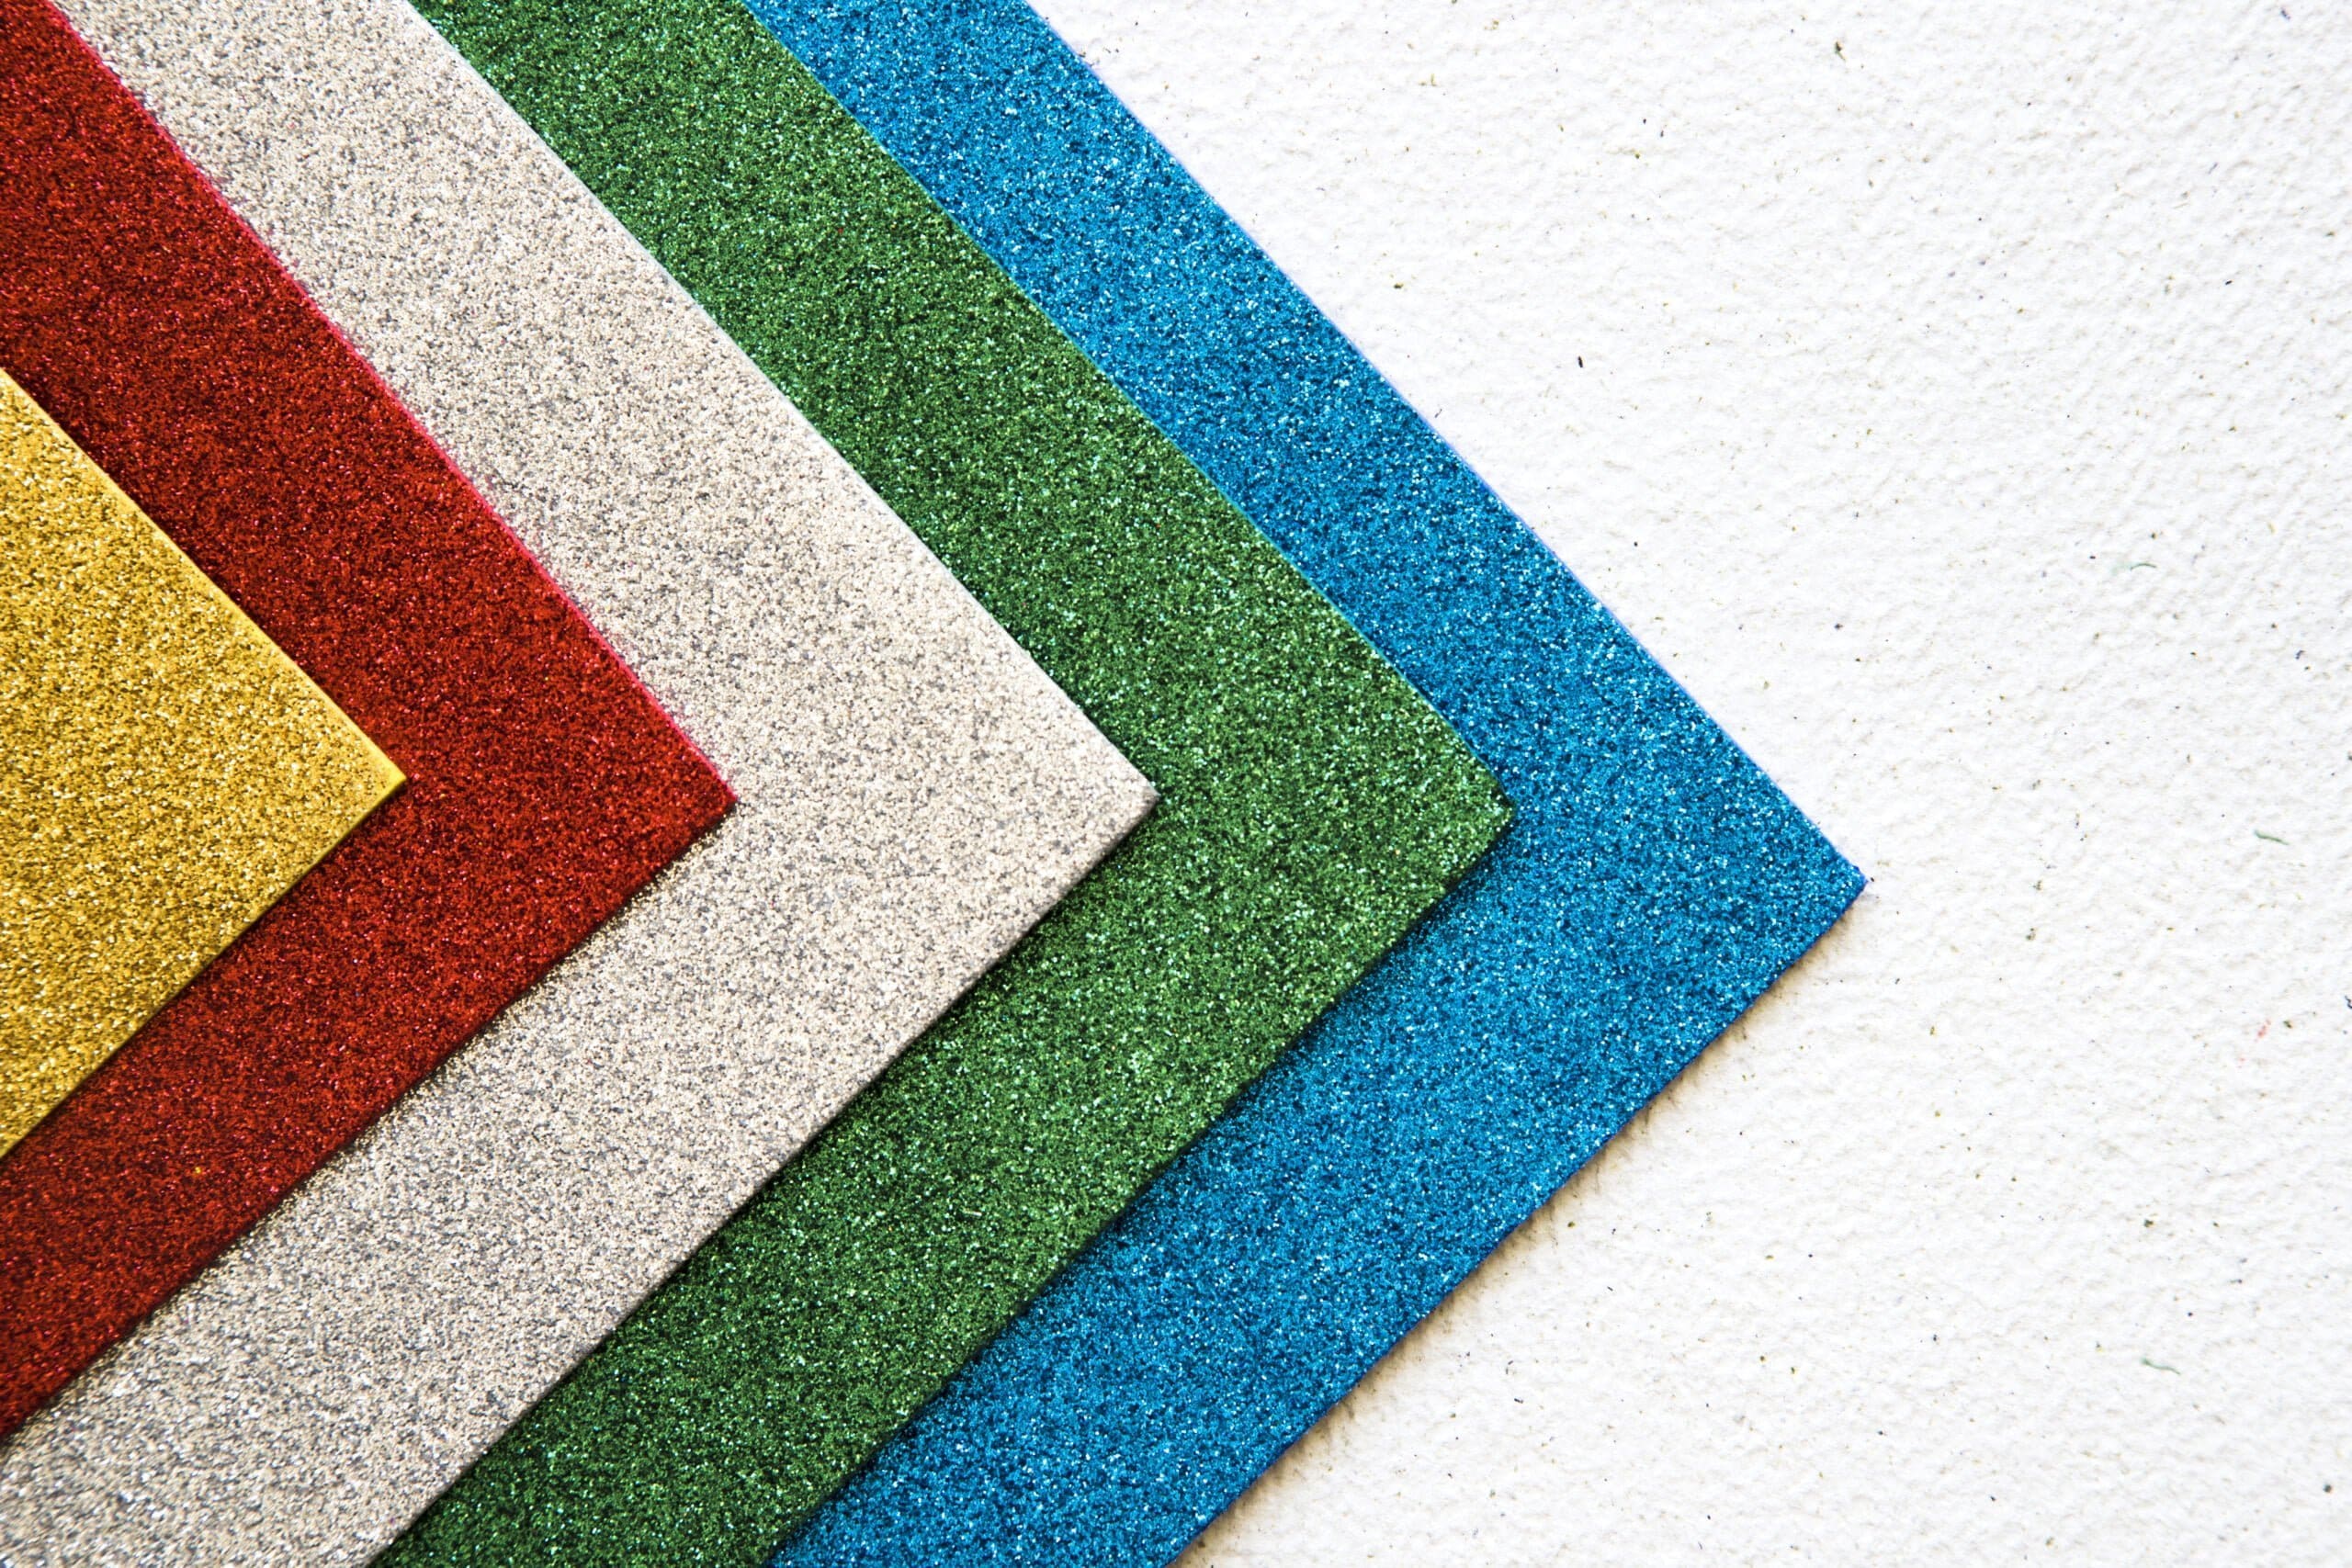 colorful carpet samples against a white concrete floor